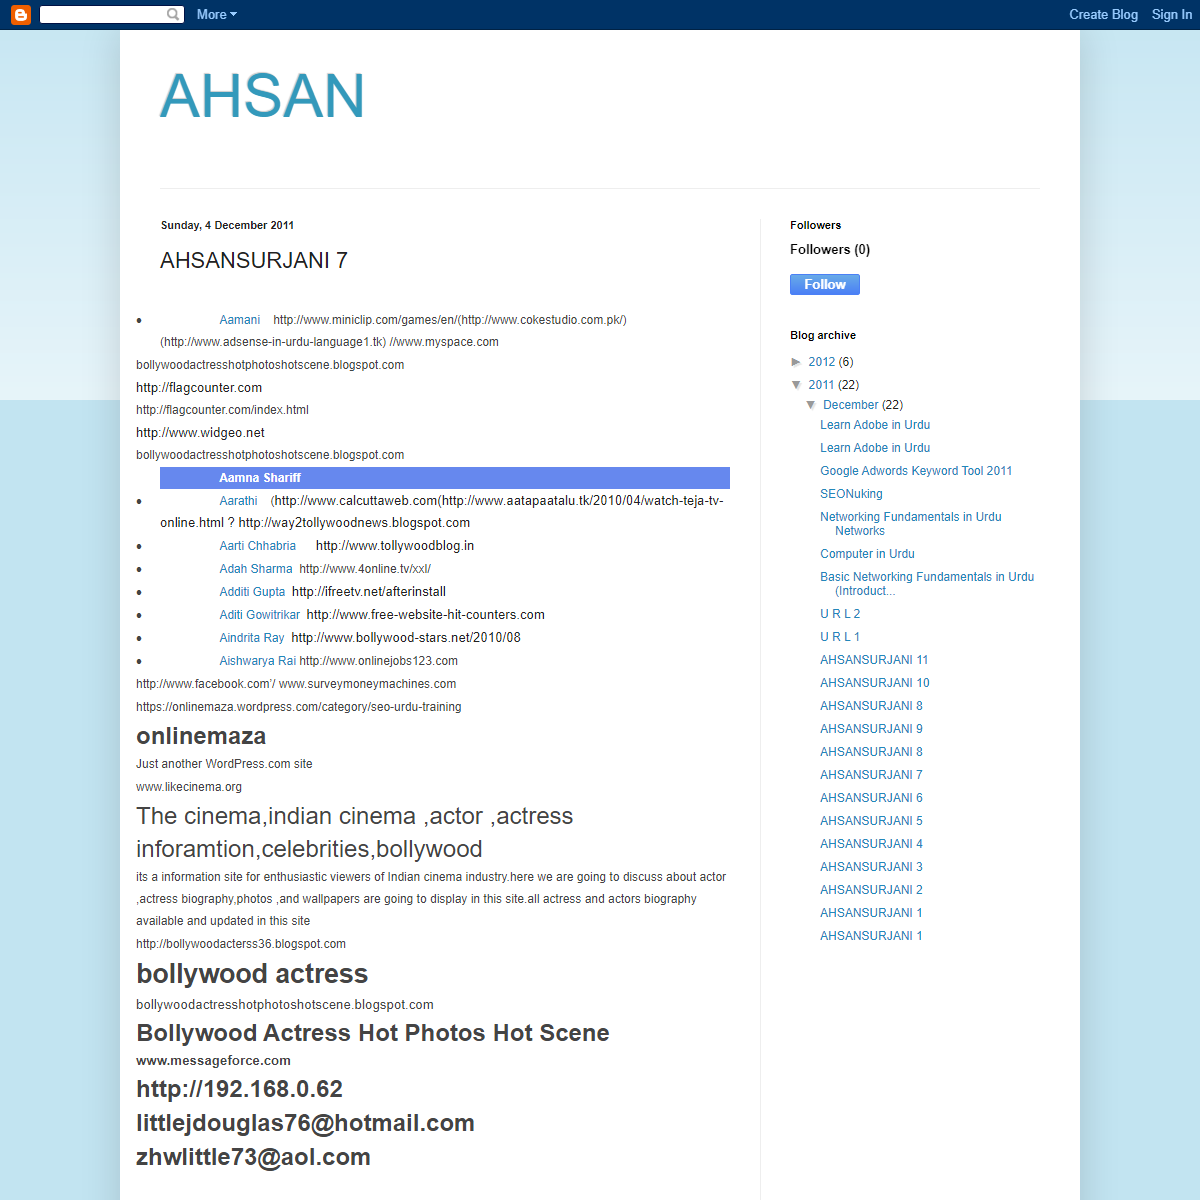 A complete backup of https://ahsansurjani.blogspot.com/2011/12/ahsansurjani-7.html